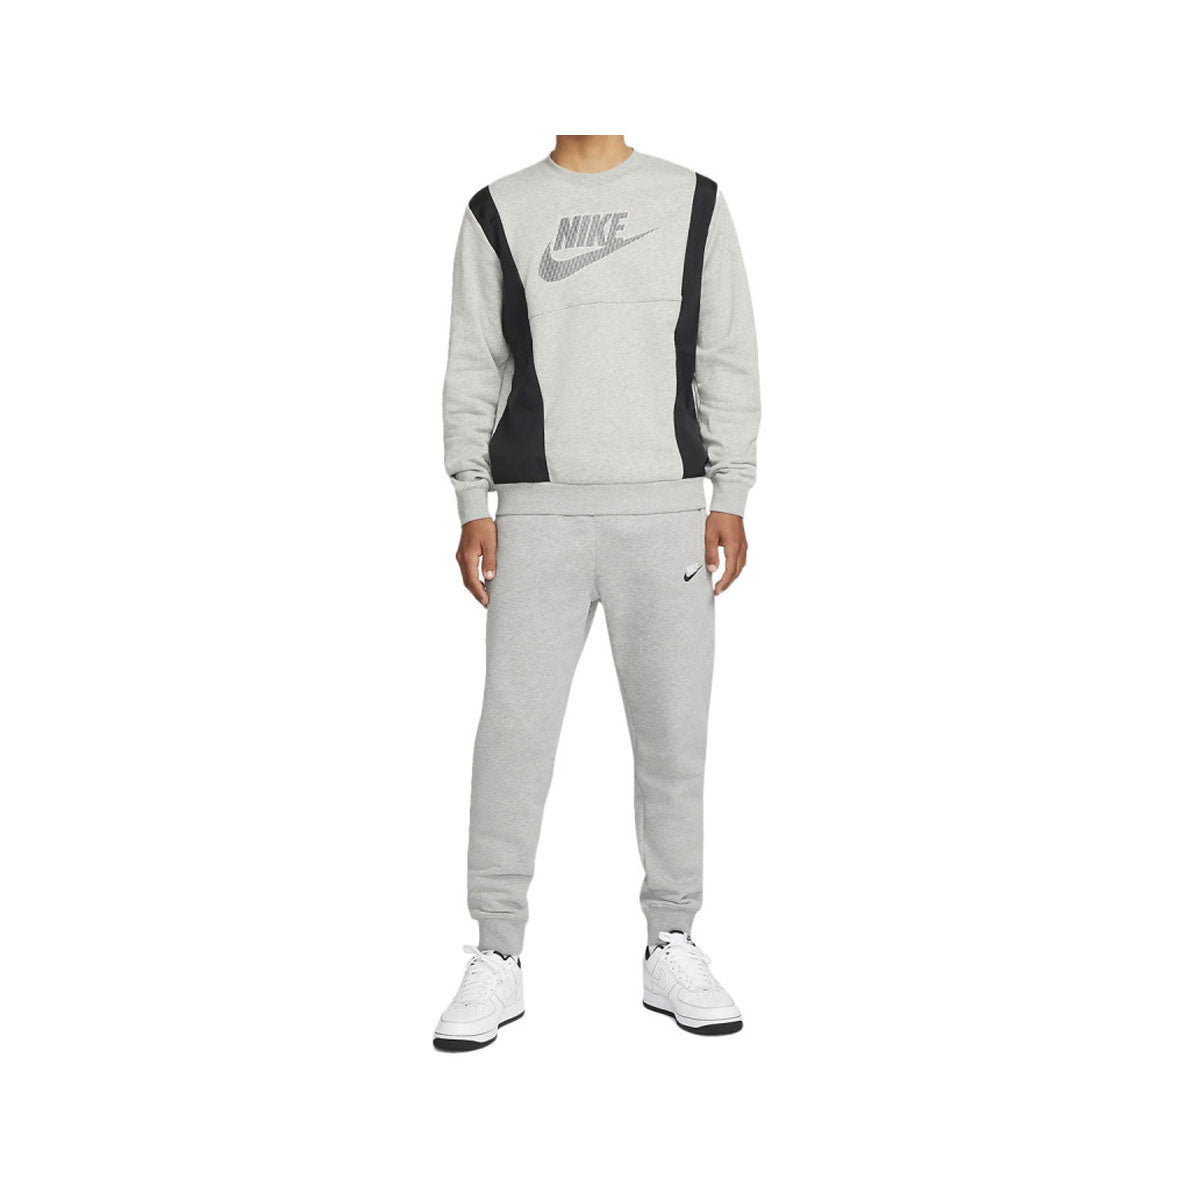 Nike Men's Hybrid Fleece Sweatshirt